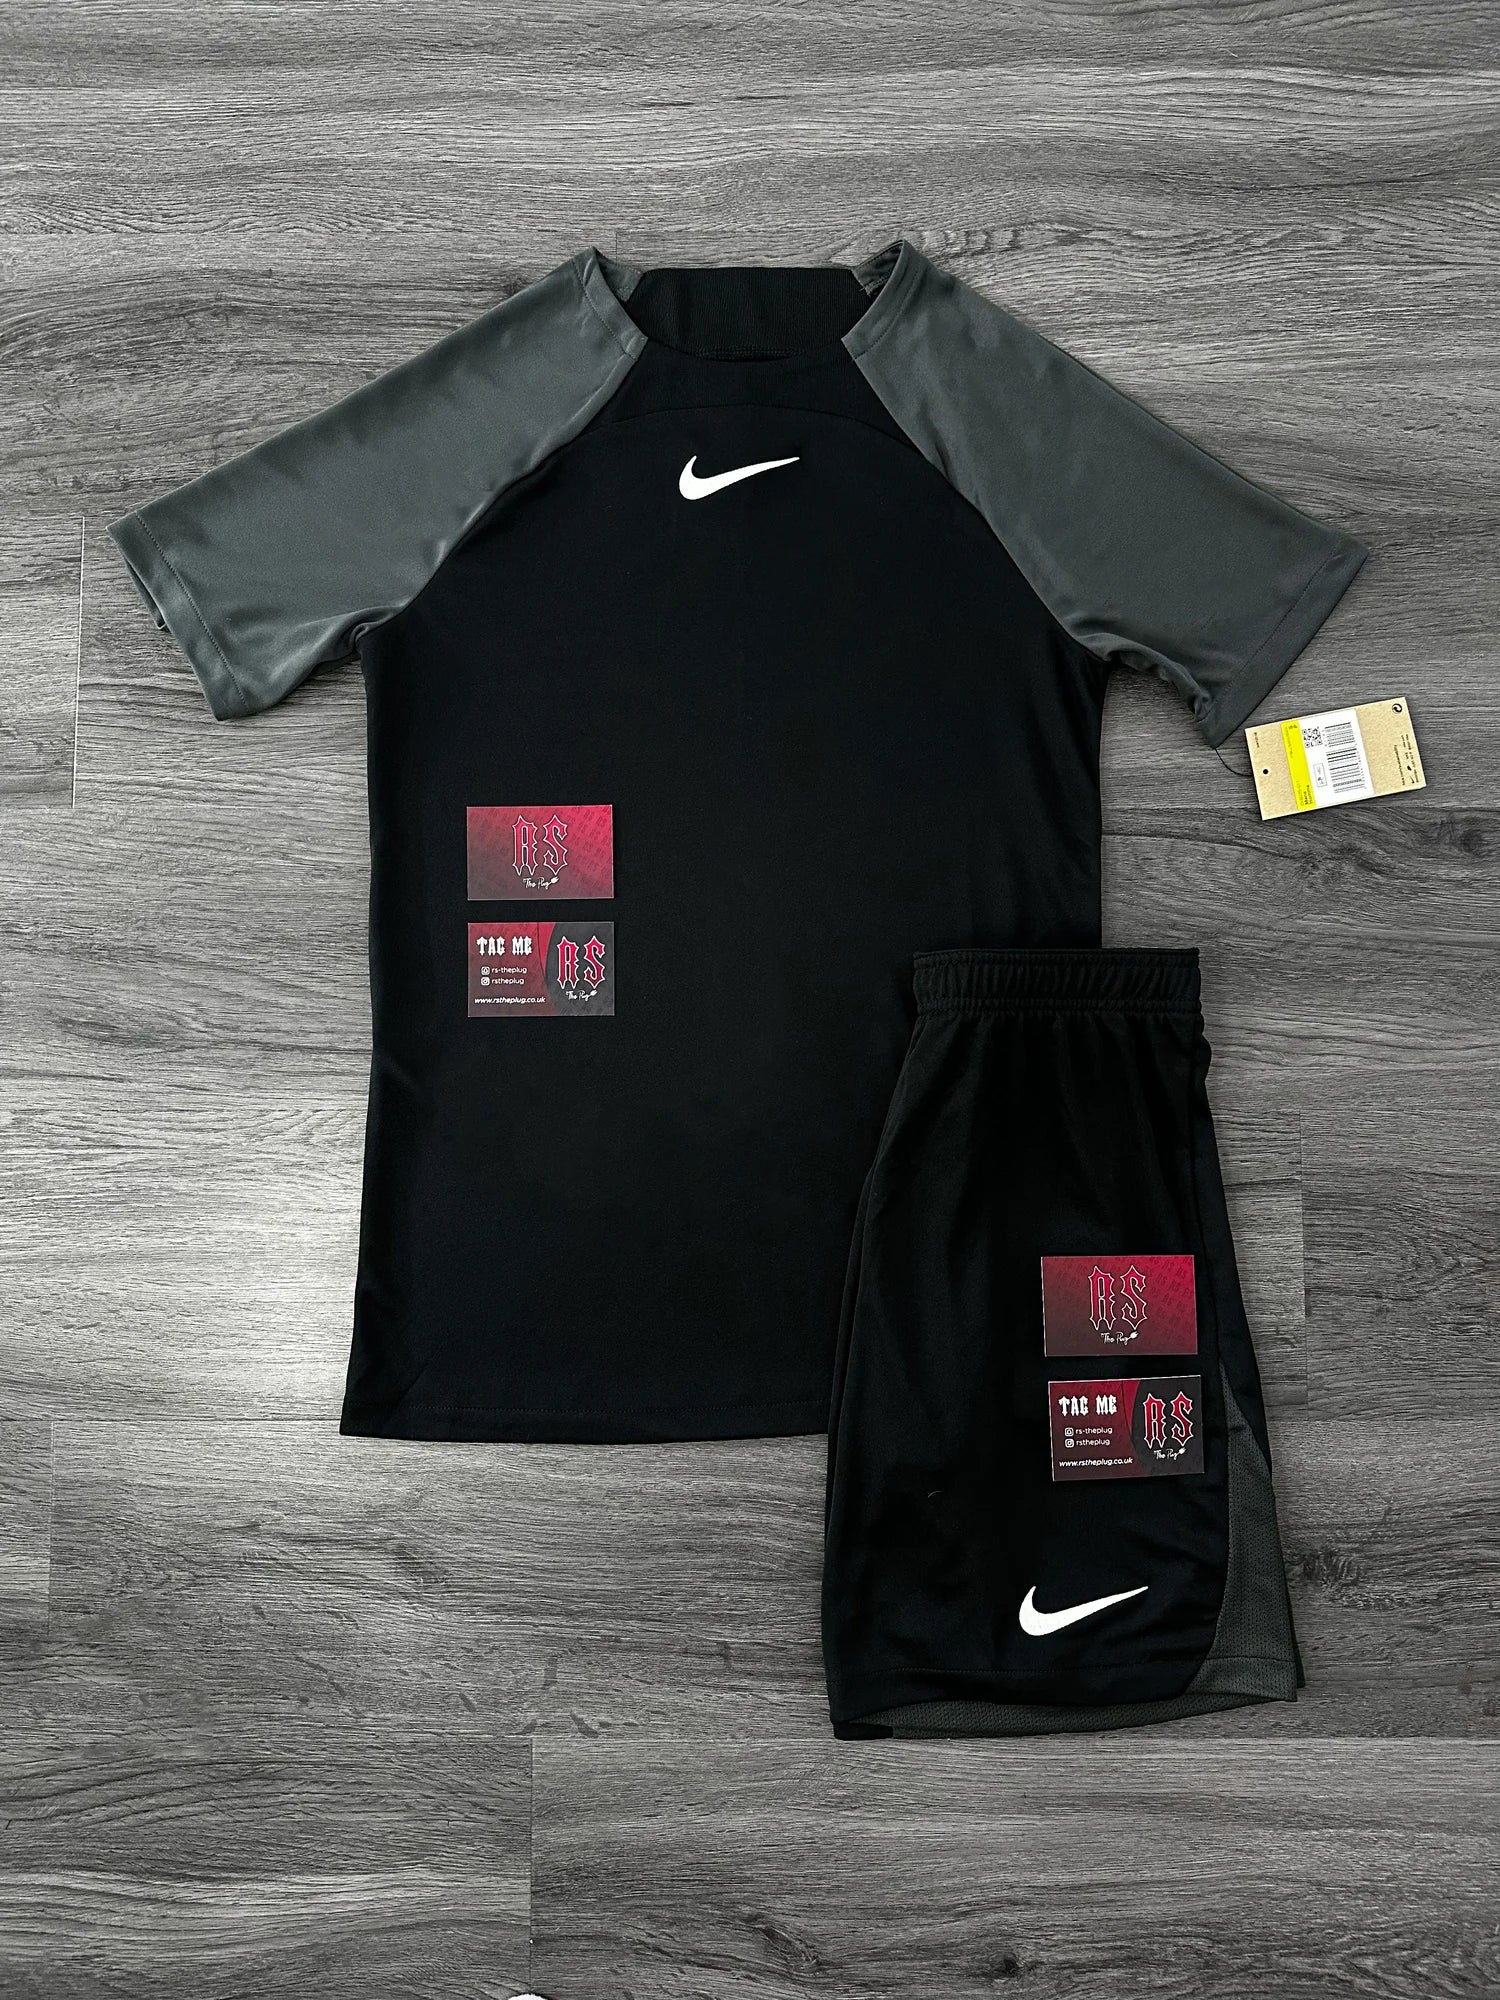 Nike Dri Fit Short Set Black/Grey